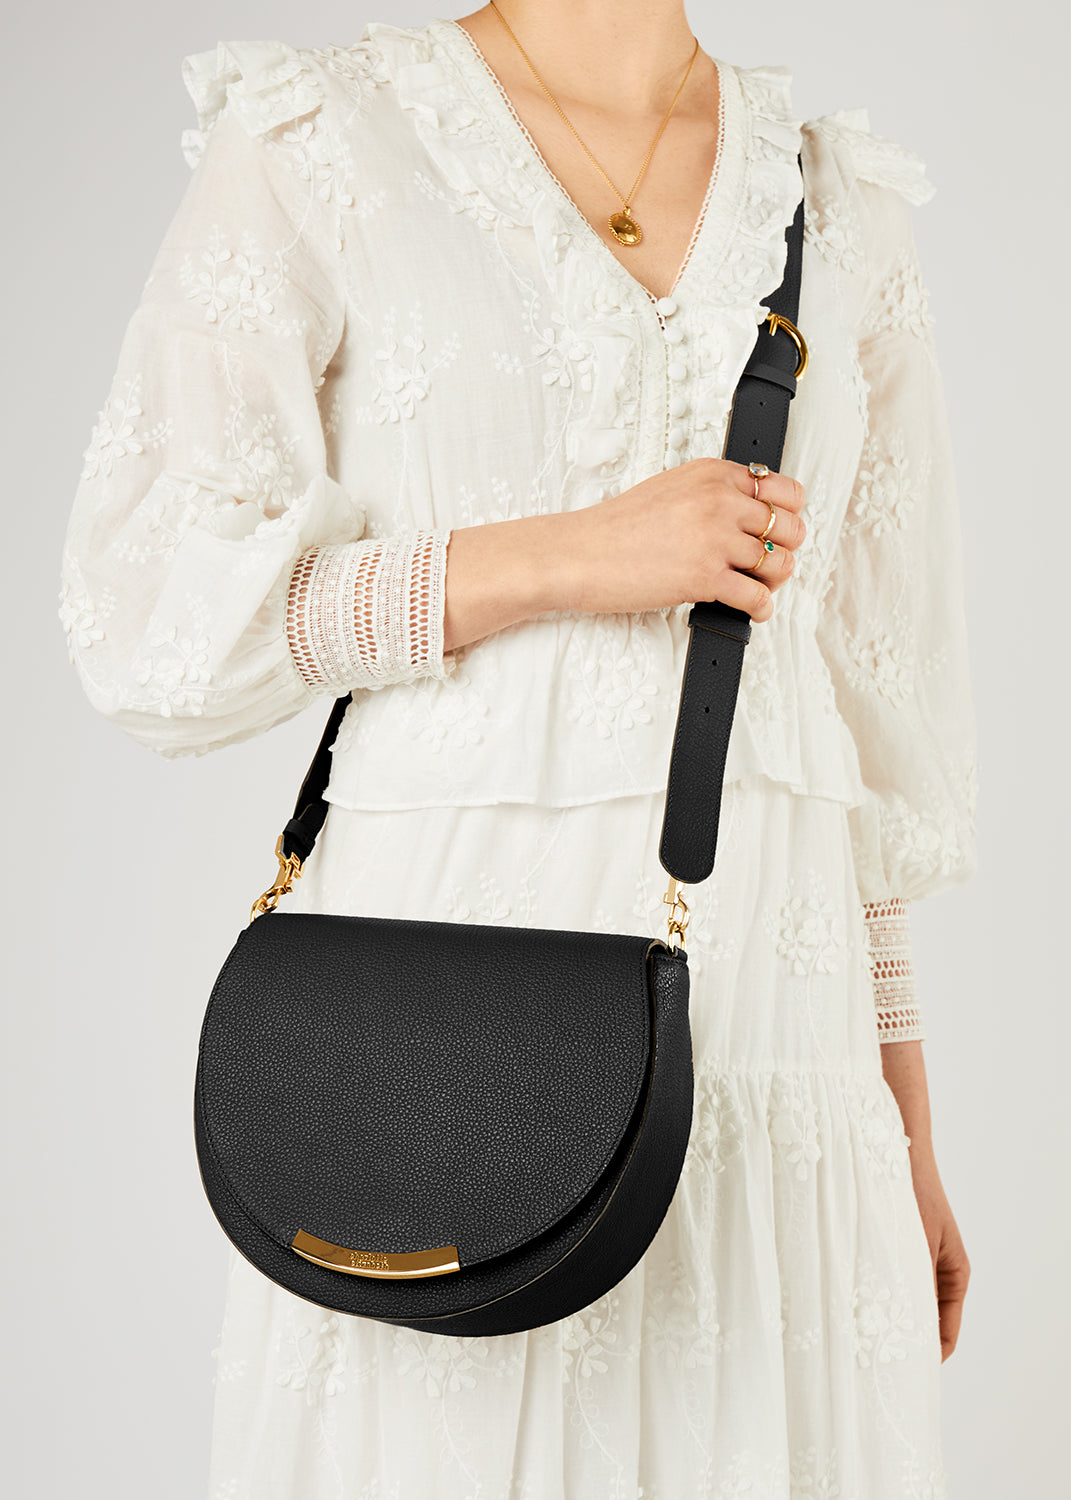 Minimalist classic handbag black saddle made in London